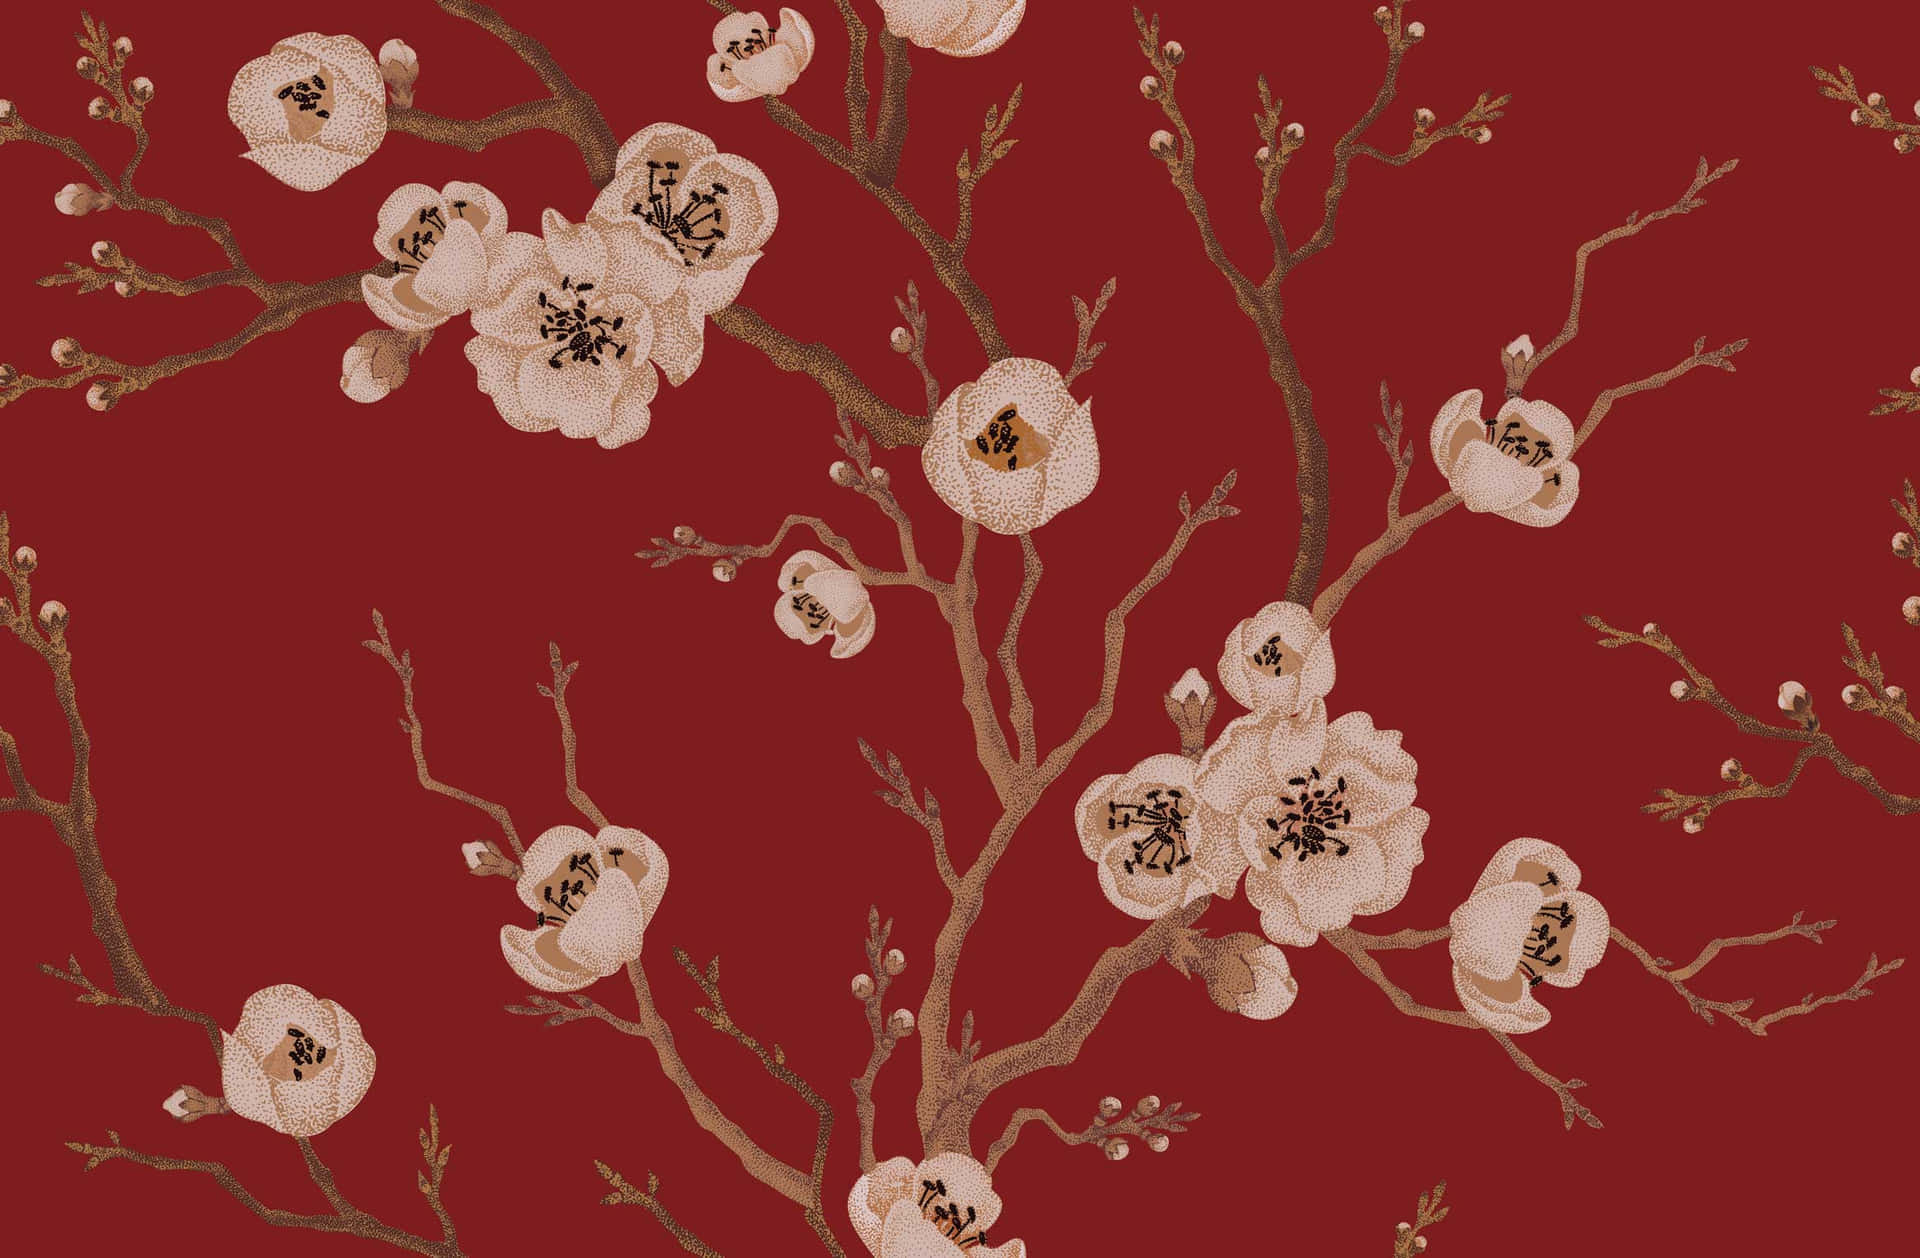 Vibrant Floral Art Masterpiece Wallpaper